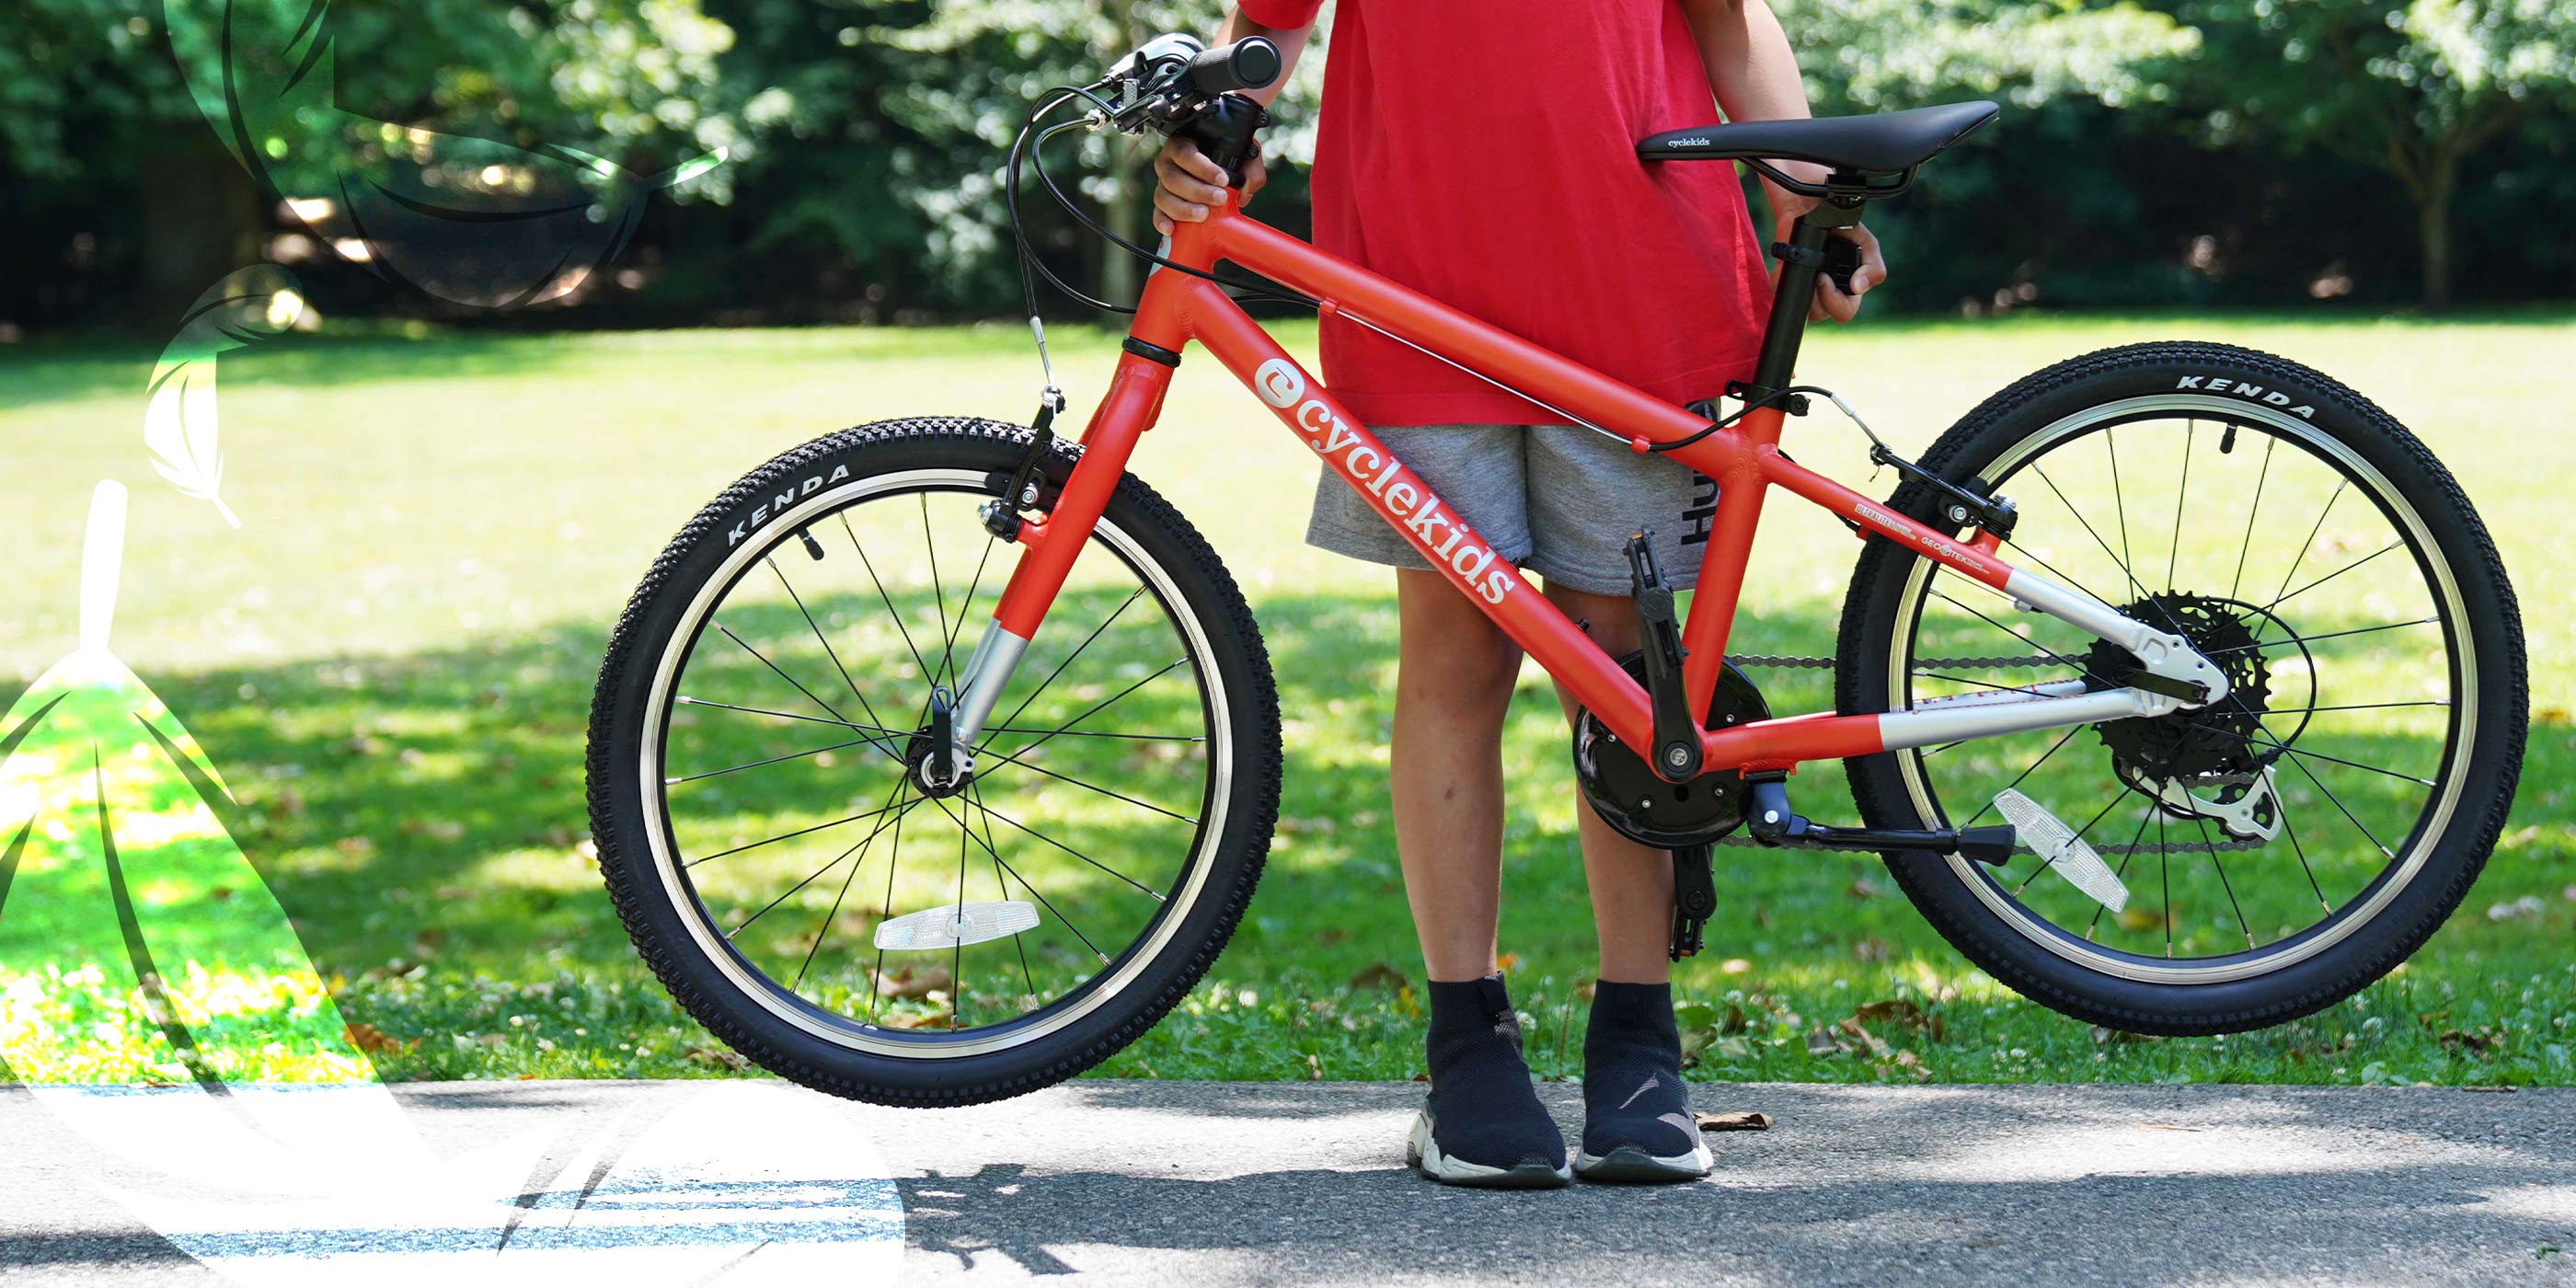 A little boy effortlessly lifting a lightweight 20" CYCLEKids bike in orange off the ground